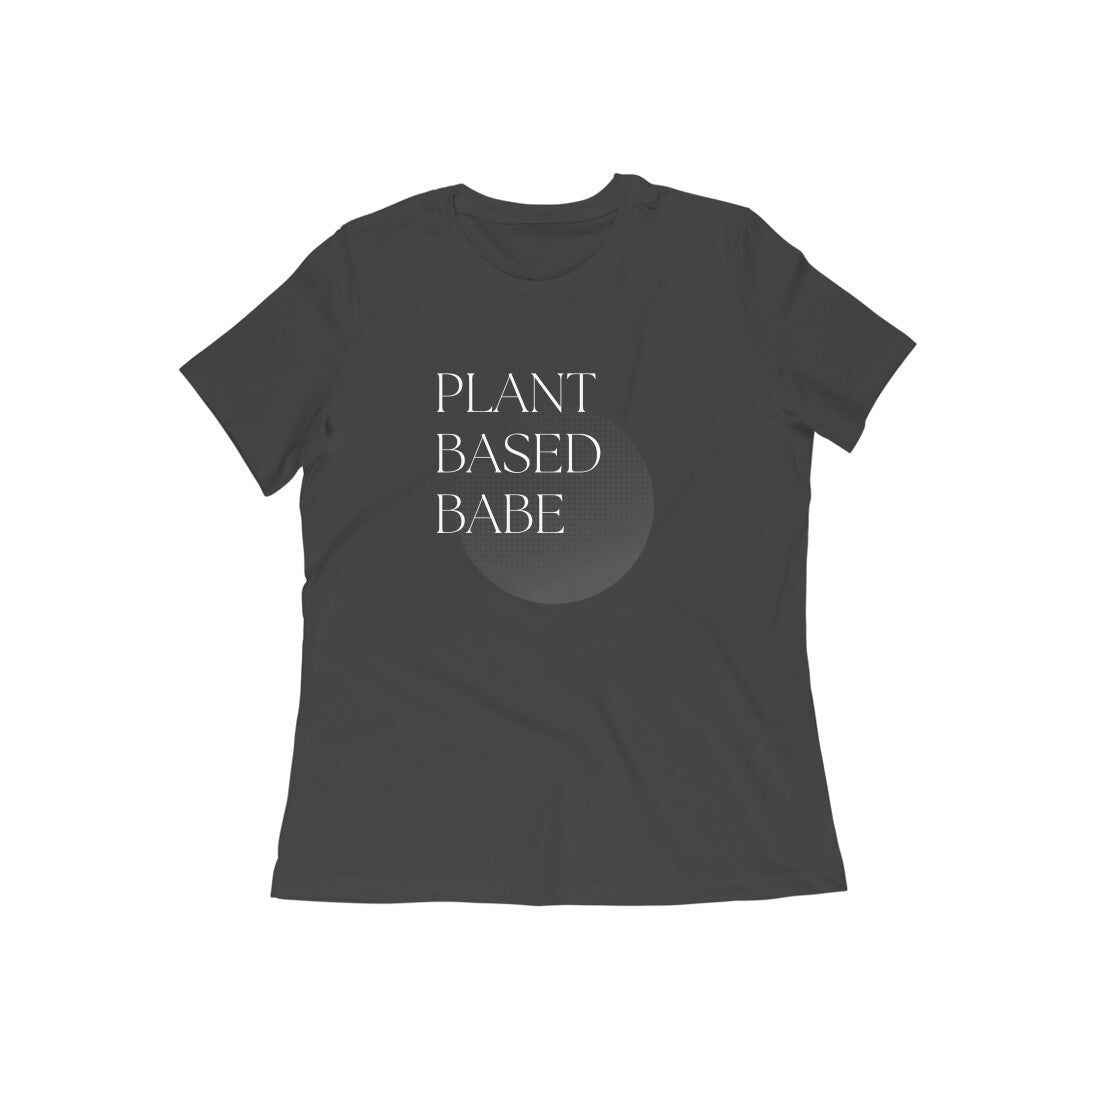 Plant Based Babe T-shirt for women